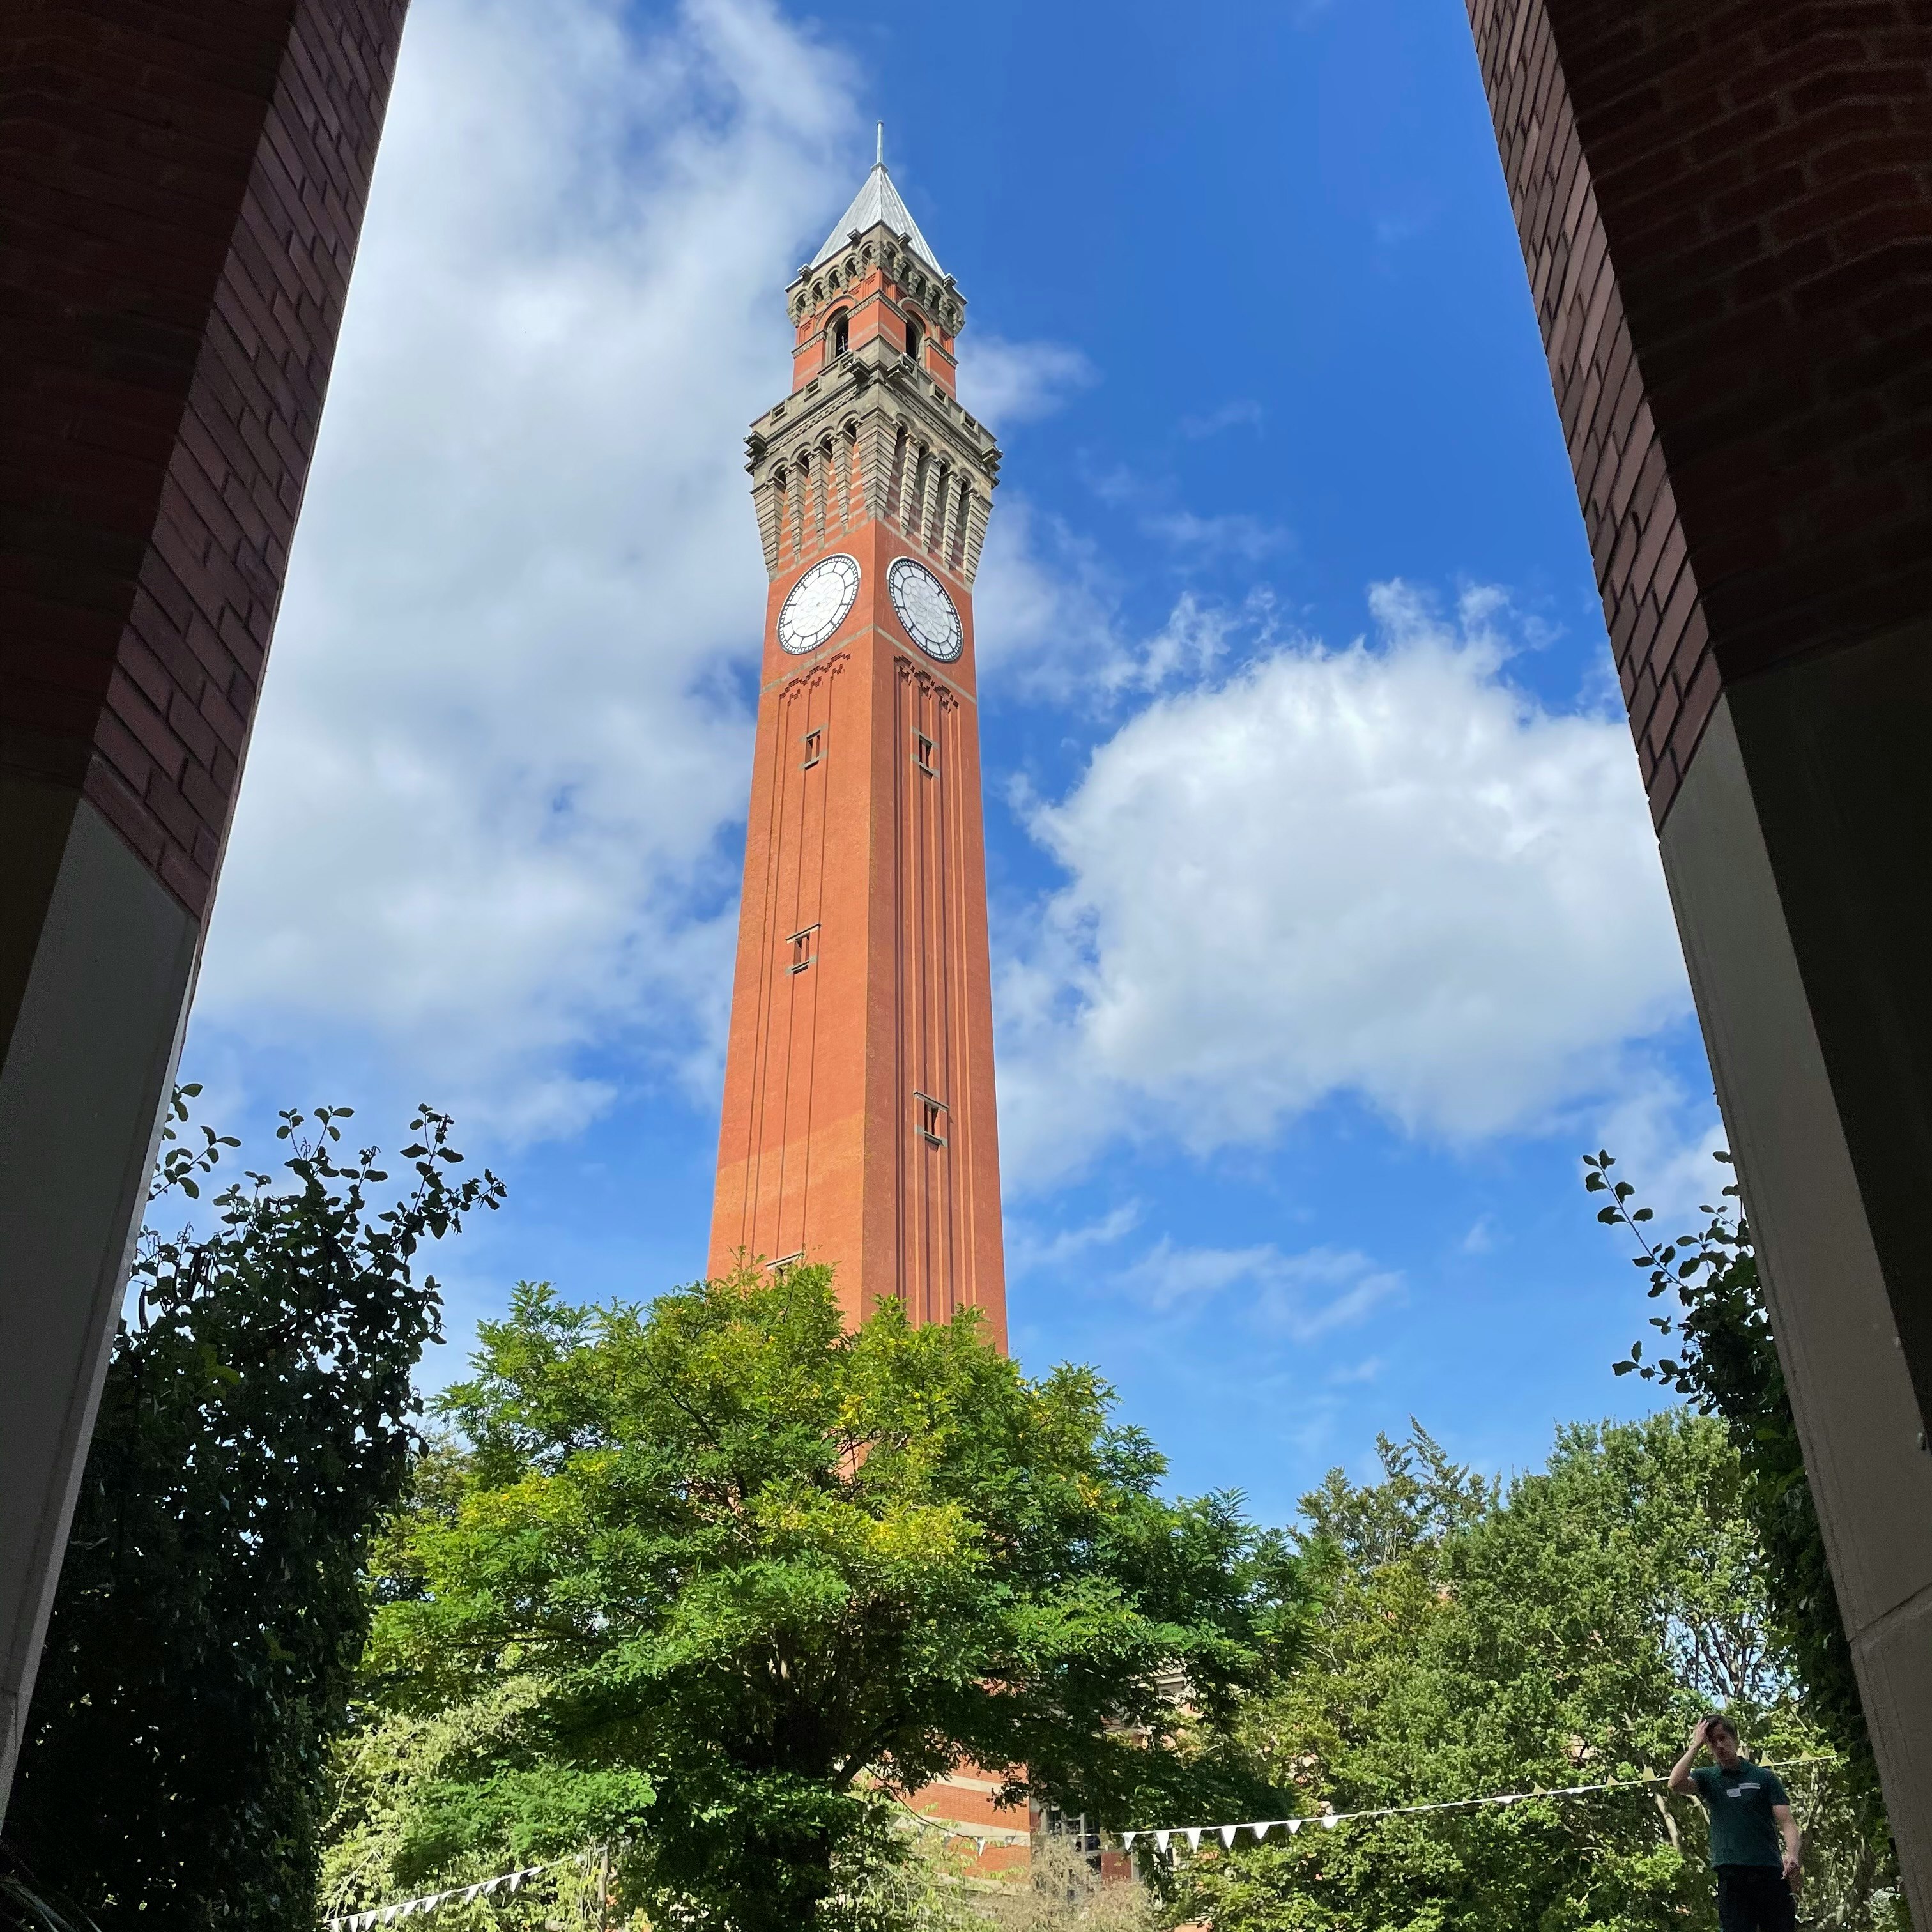 University of Birmingham 
The Clock Tower.